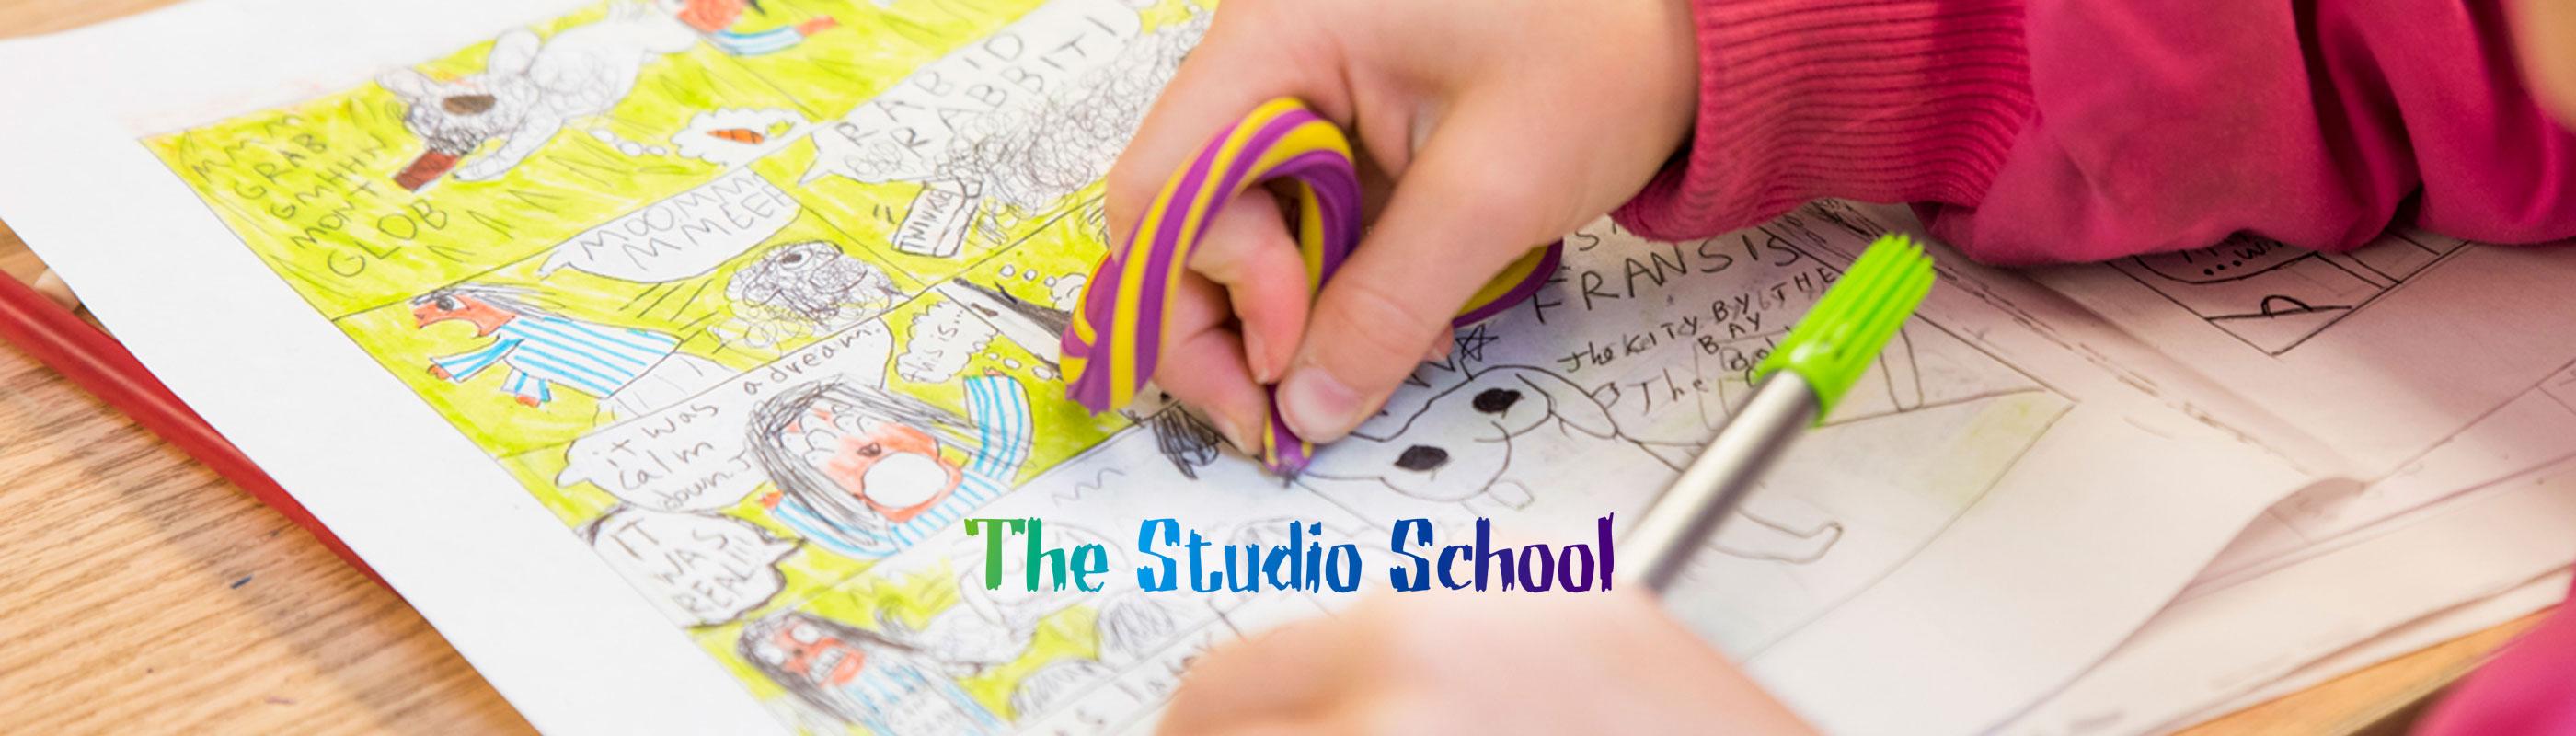 The Studio School